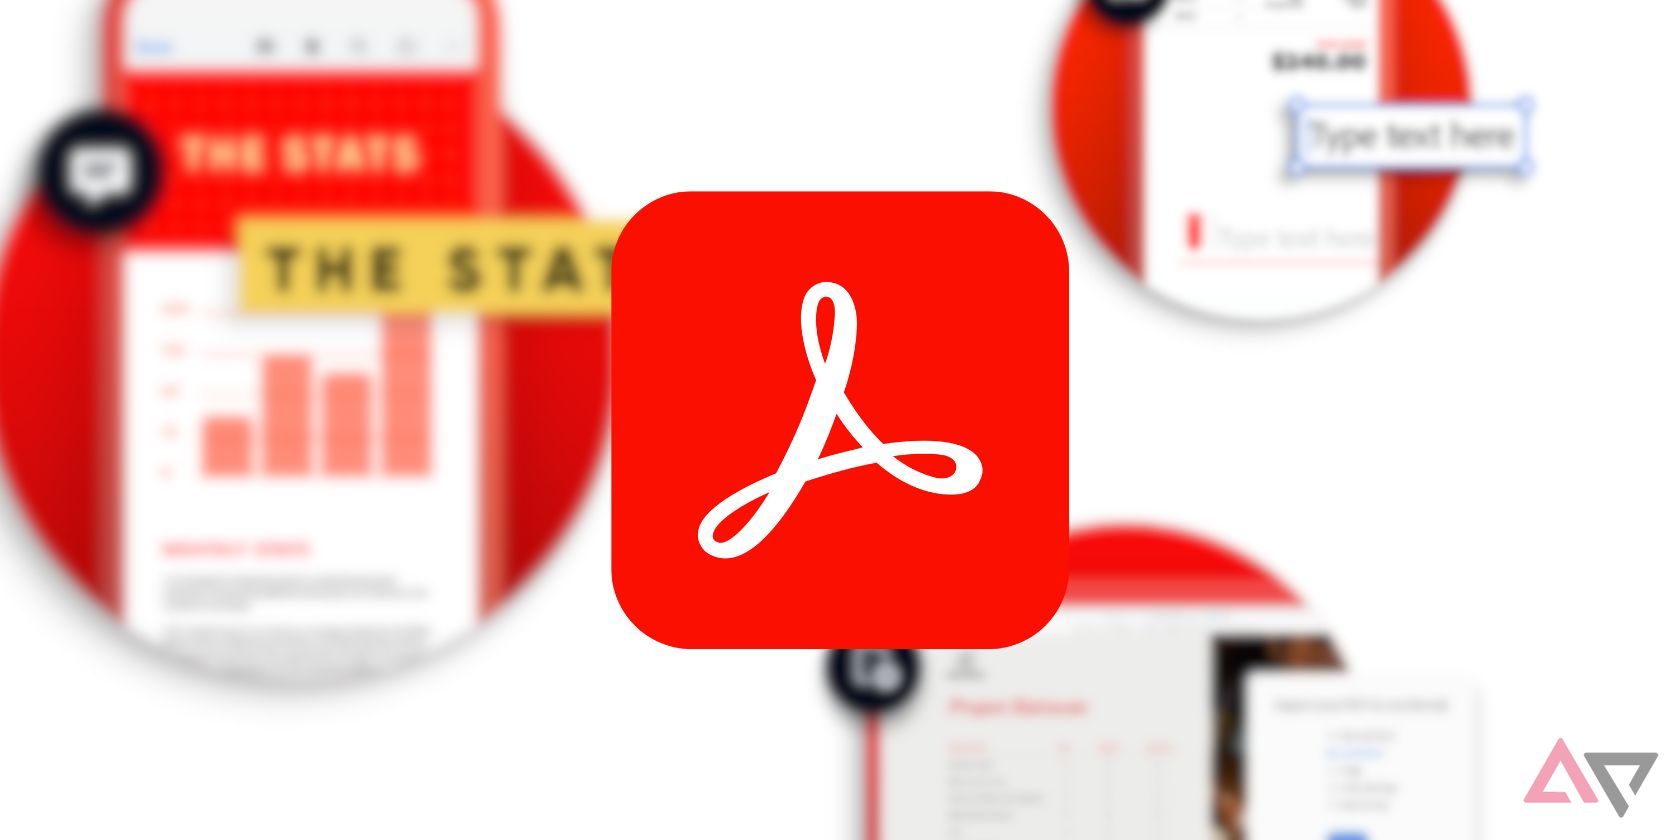 adobe acrobat logo superimposed on blurred graphics